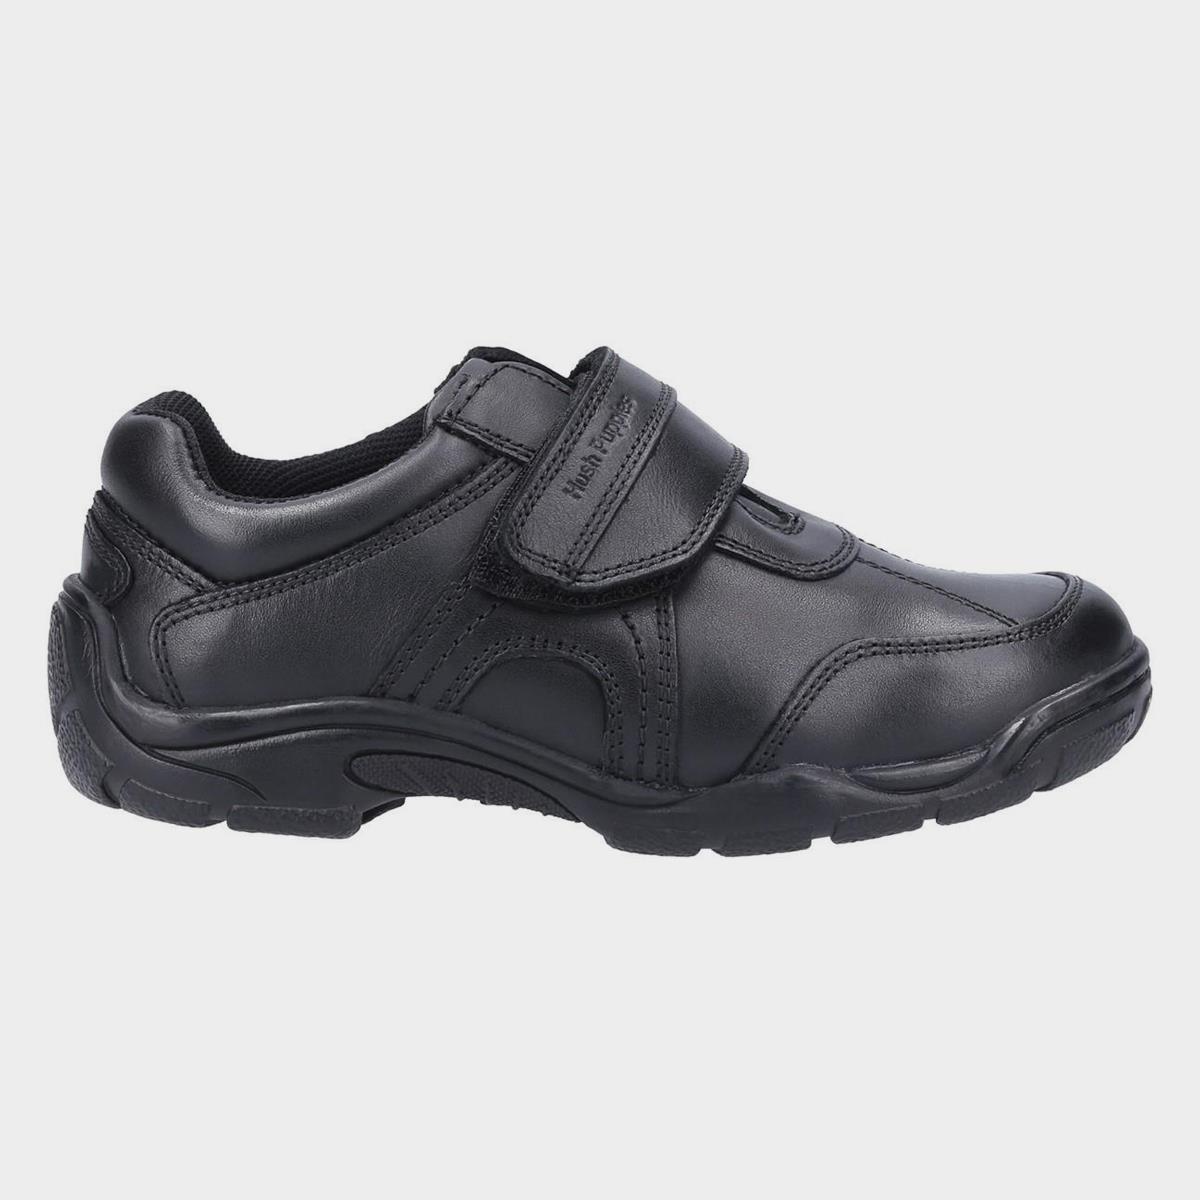 Hush Puppies Arlo Boys Black Shoe Sizes 3-6 